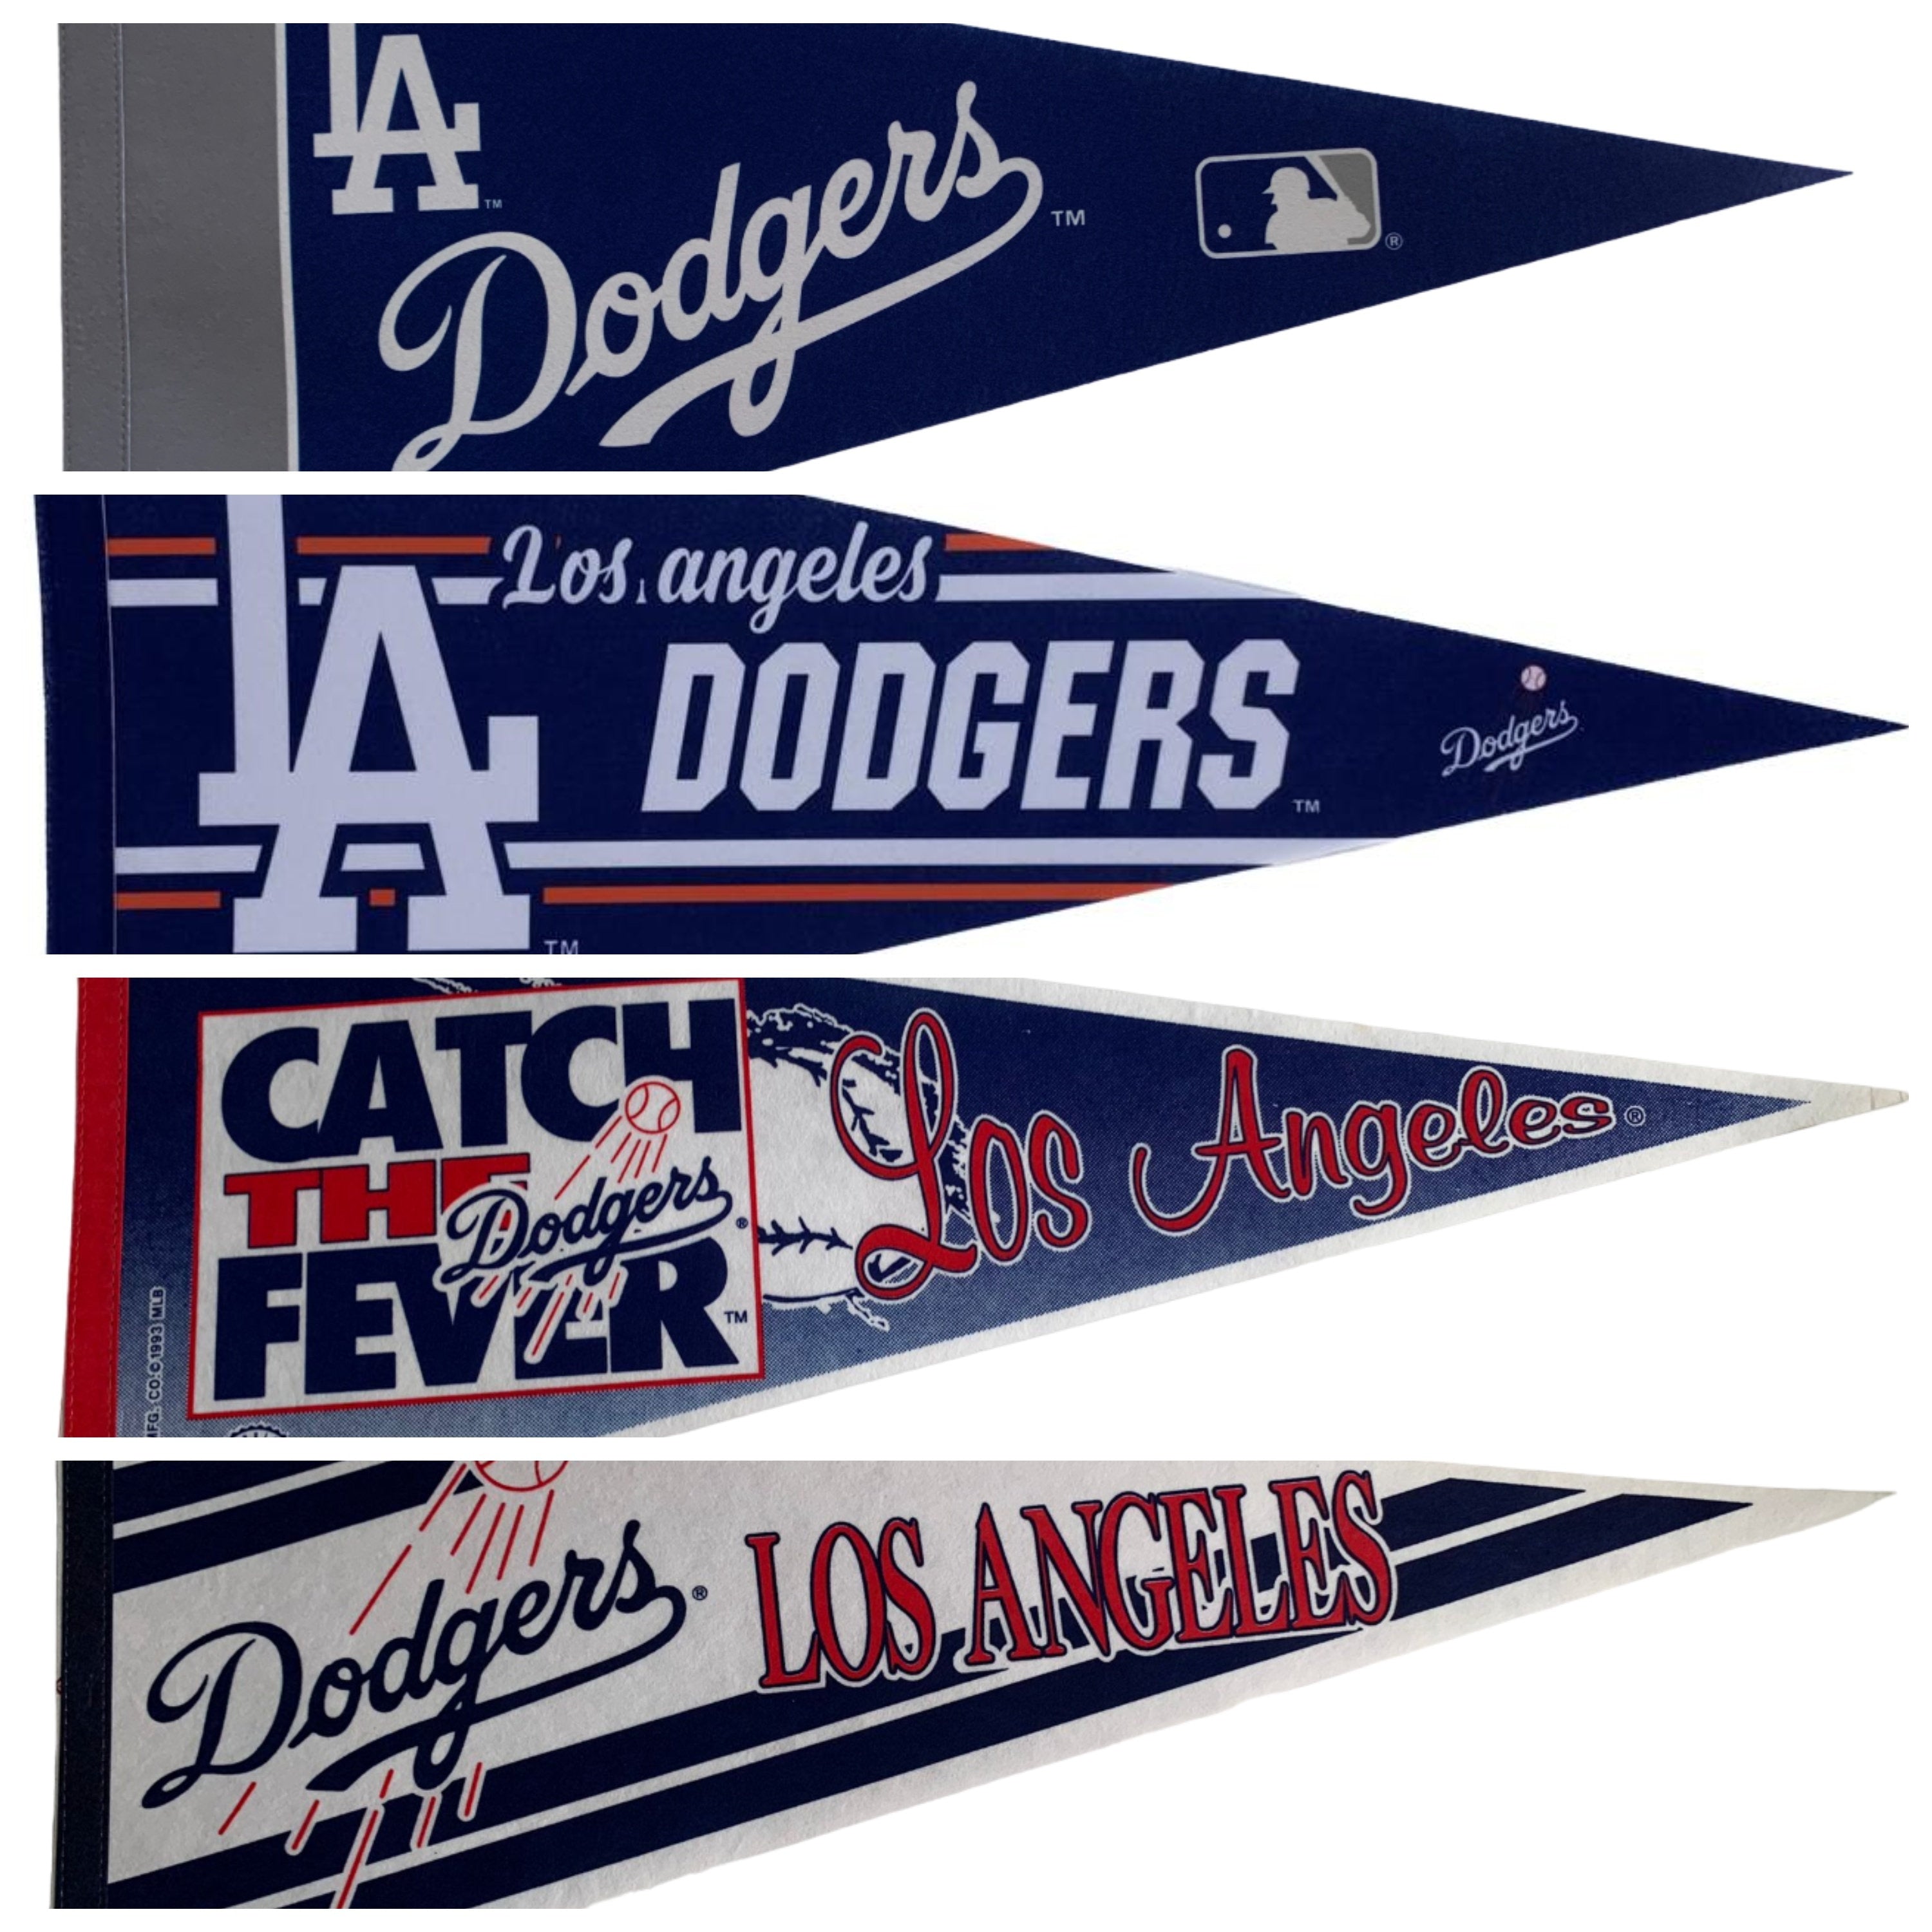 Los Angeles Dodgers california mlb pennants vaantje vlaggetje vlag vaantje fanion pennant flag honkbal basebal la kobe bryant - Design3OldLogo